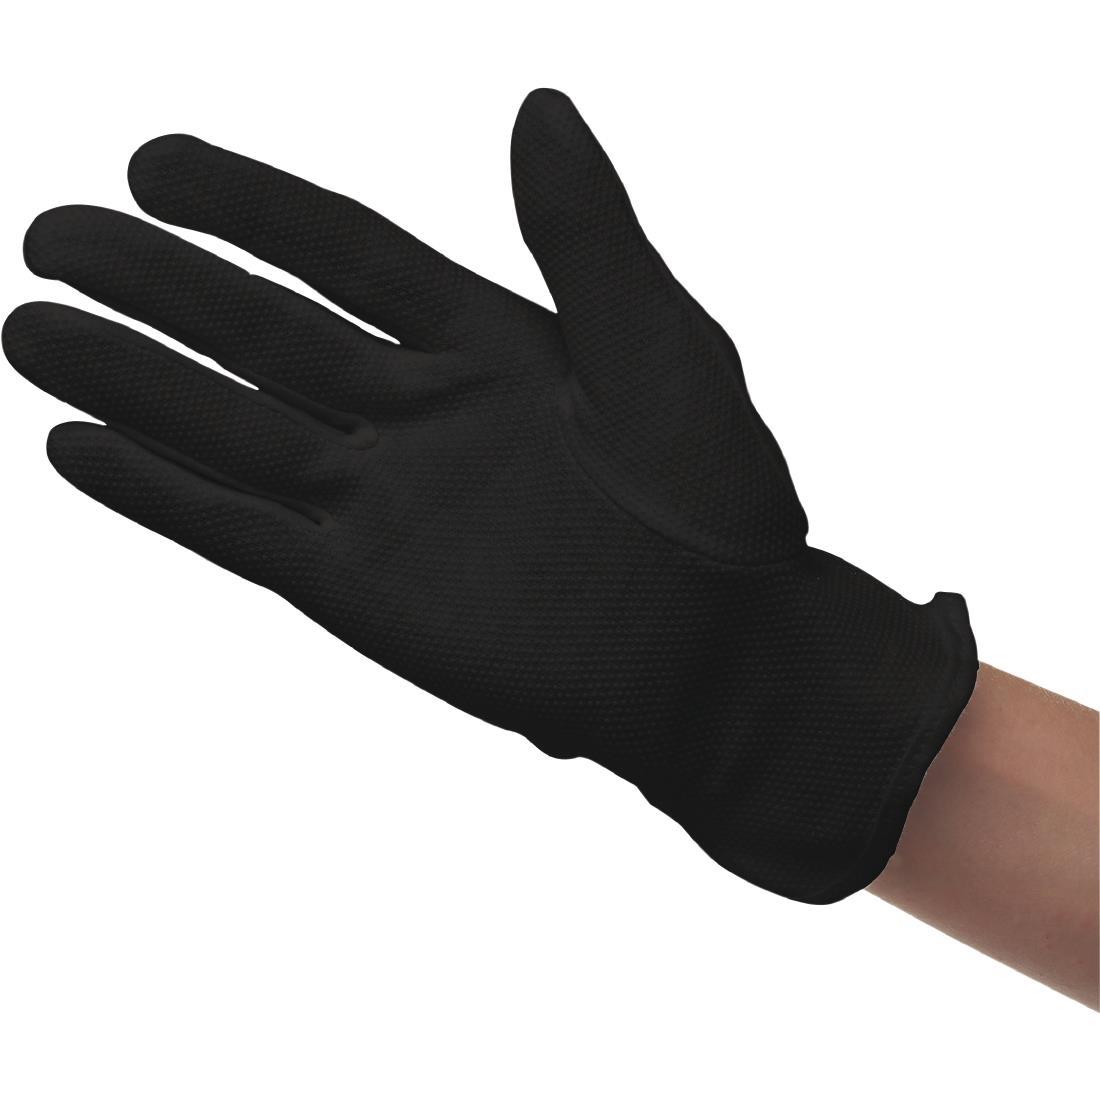 Heat Resistant Gloves Black M - BB139-M  - 1